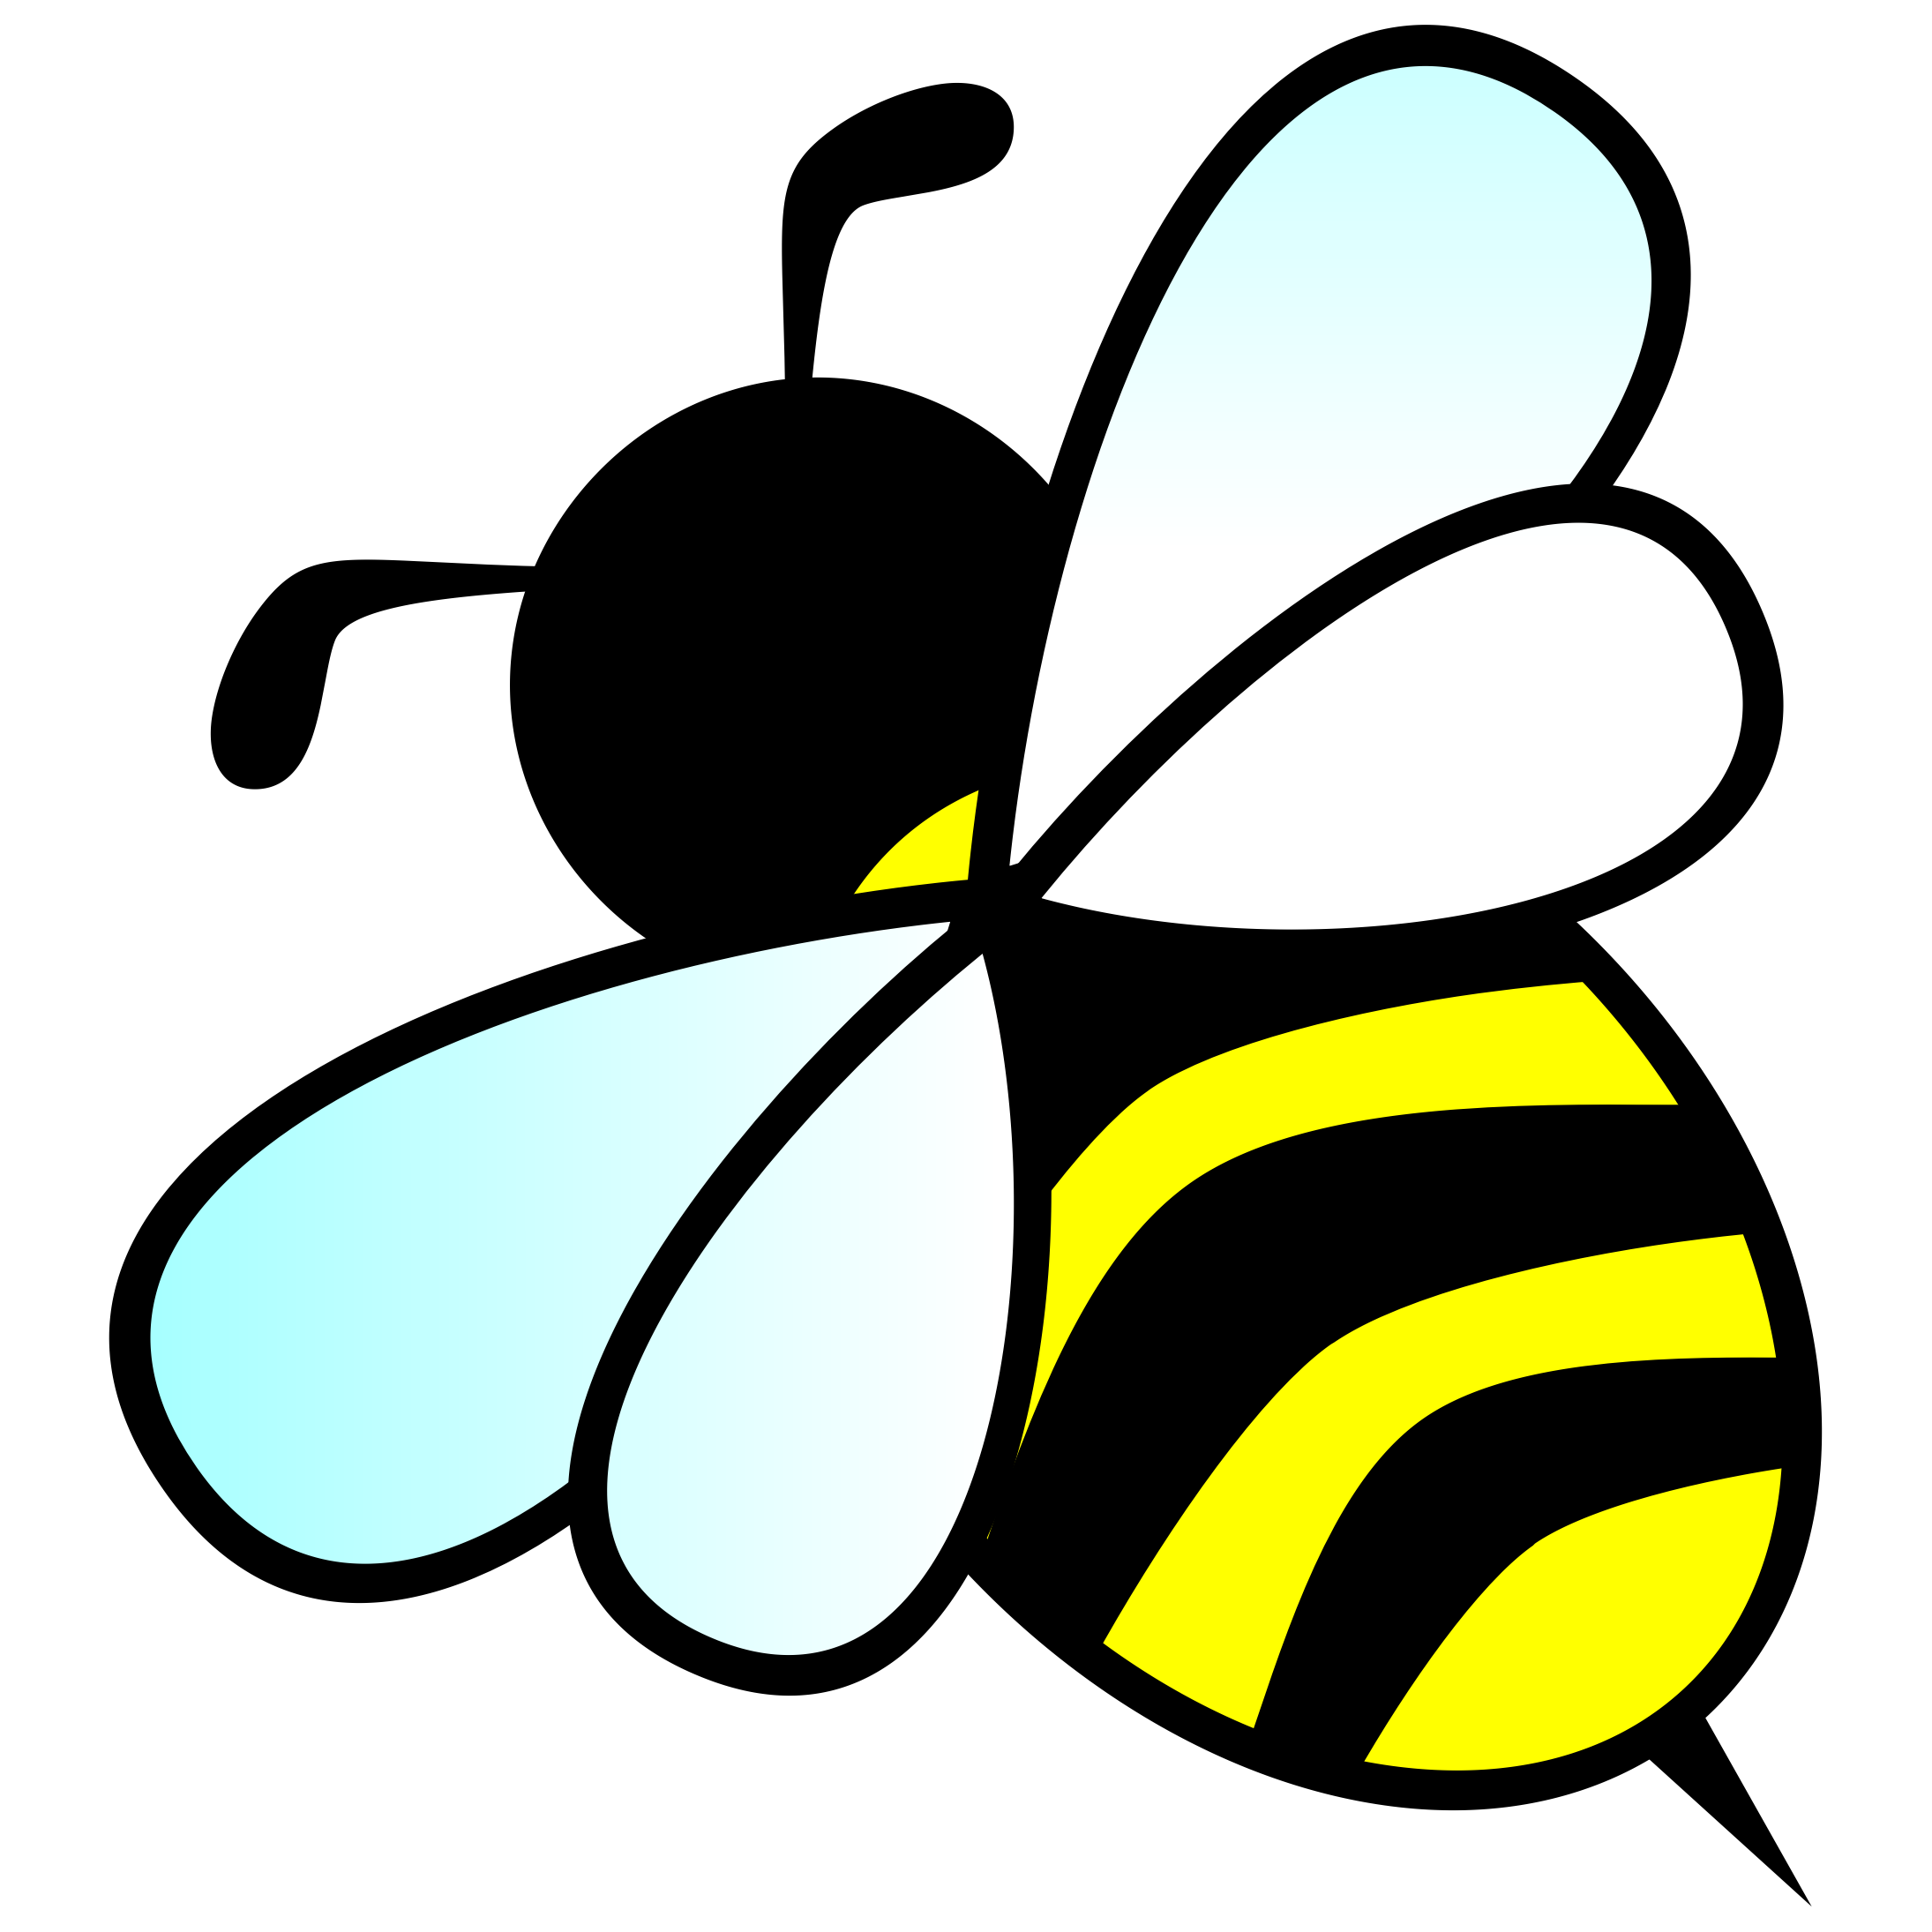 Bumble bee cute bee clip art love bees cartoon clip art more clip 2